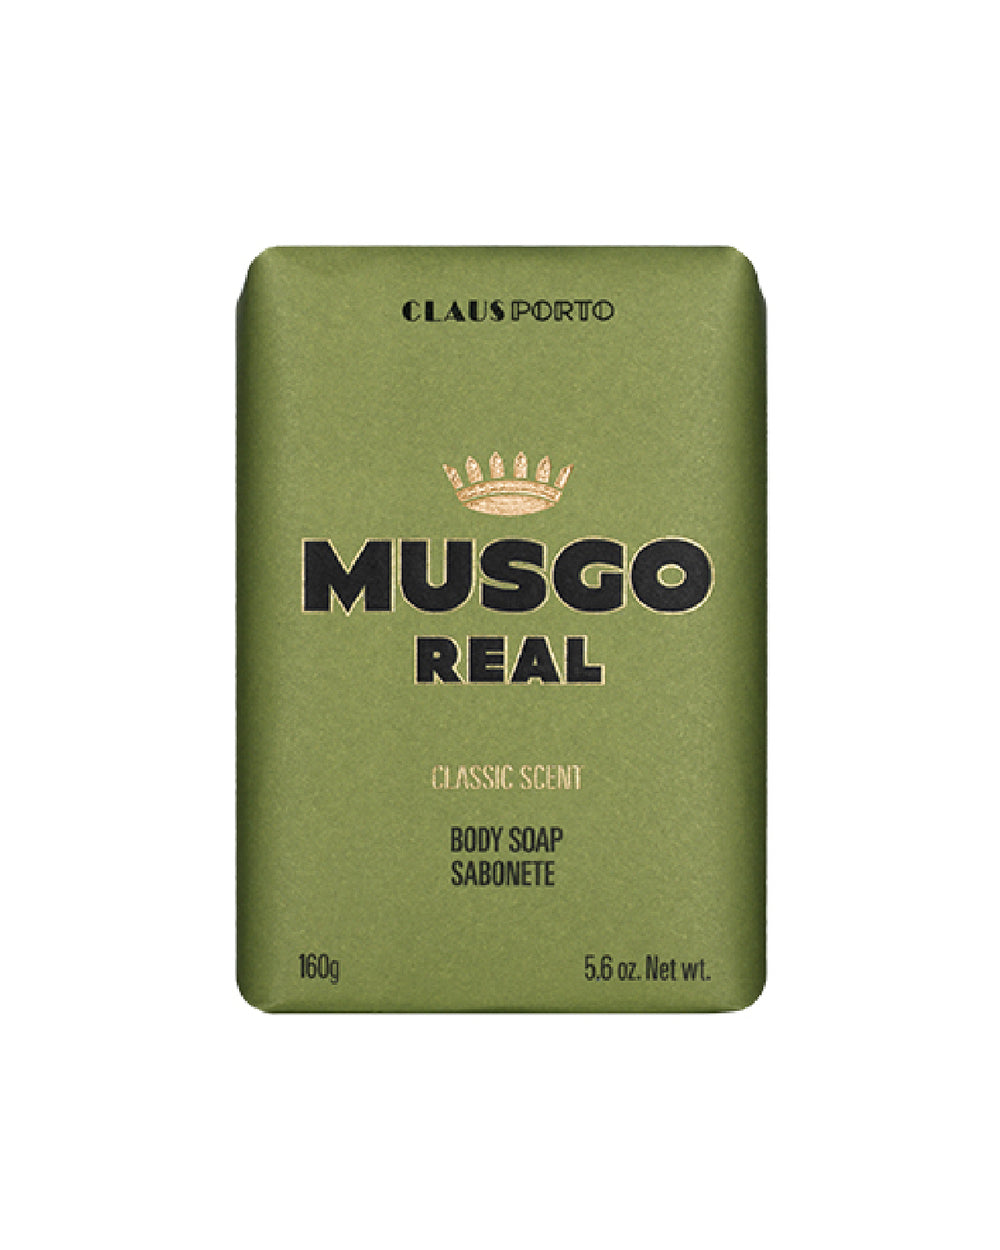 Musgo Real Sapone Classic Scent